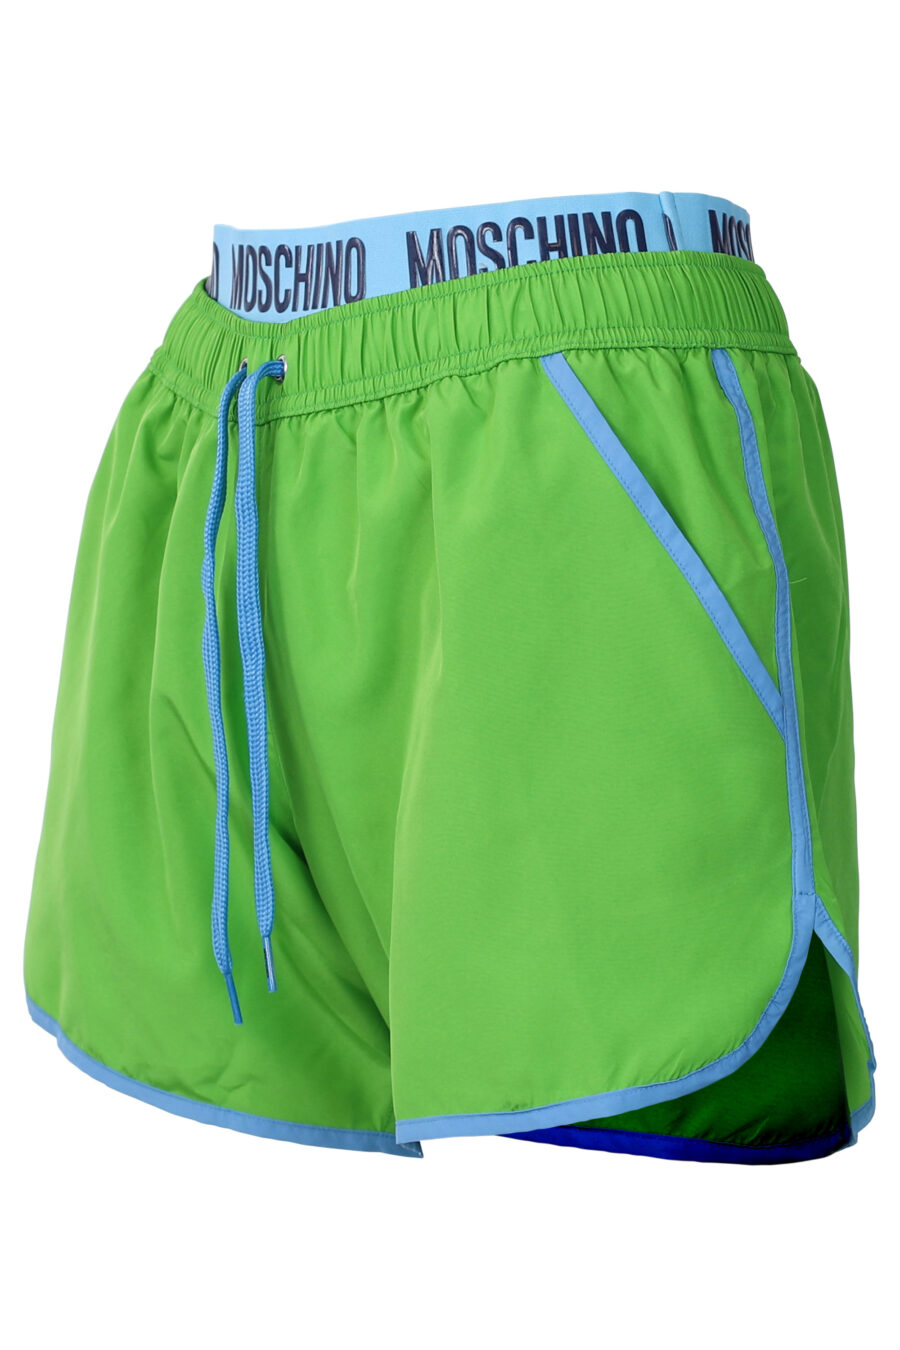 Green swimming costume with ribbon logo - IMG 0655